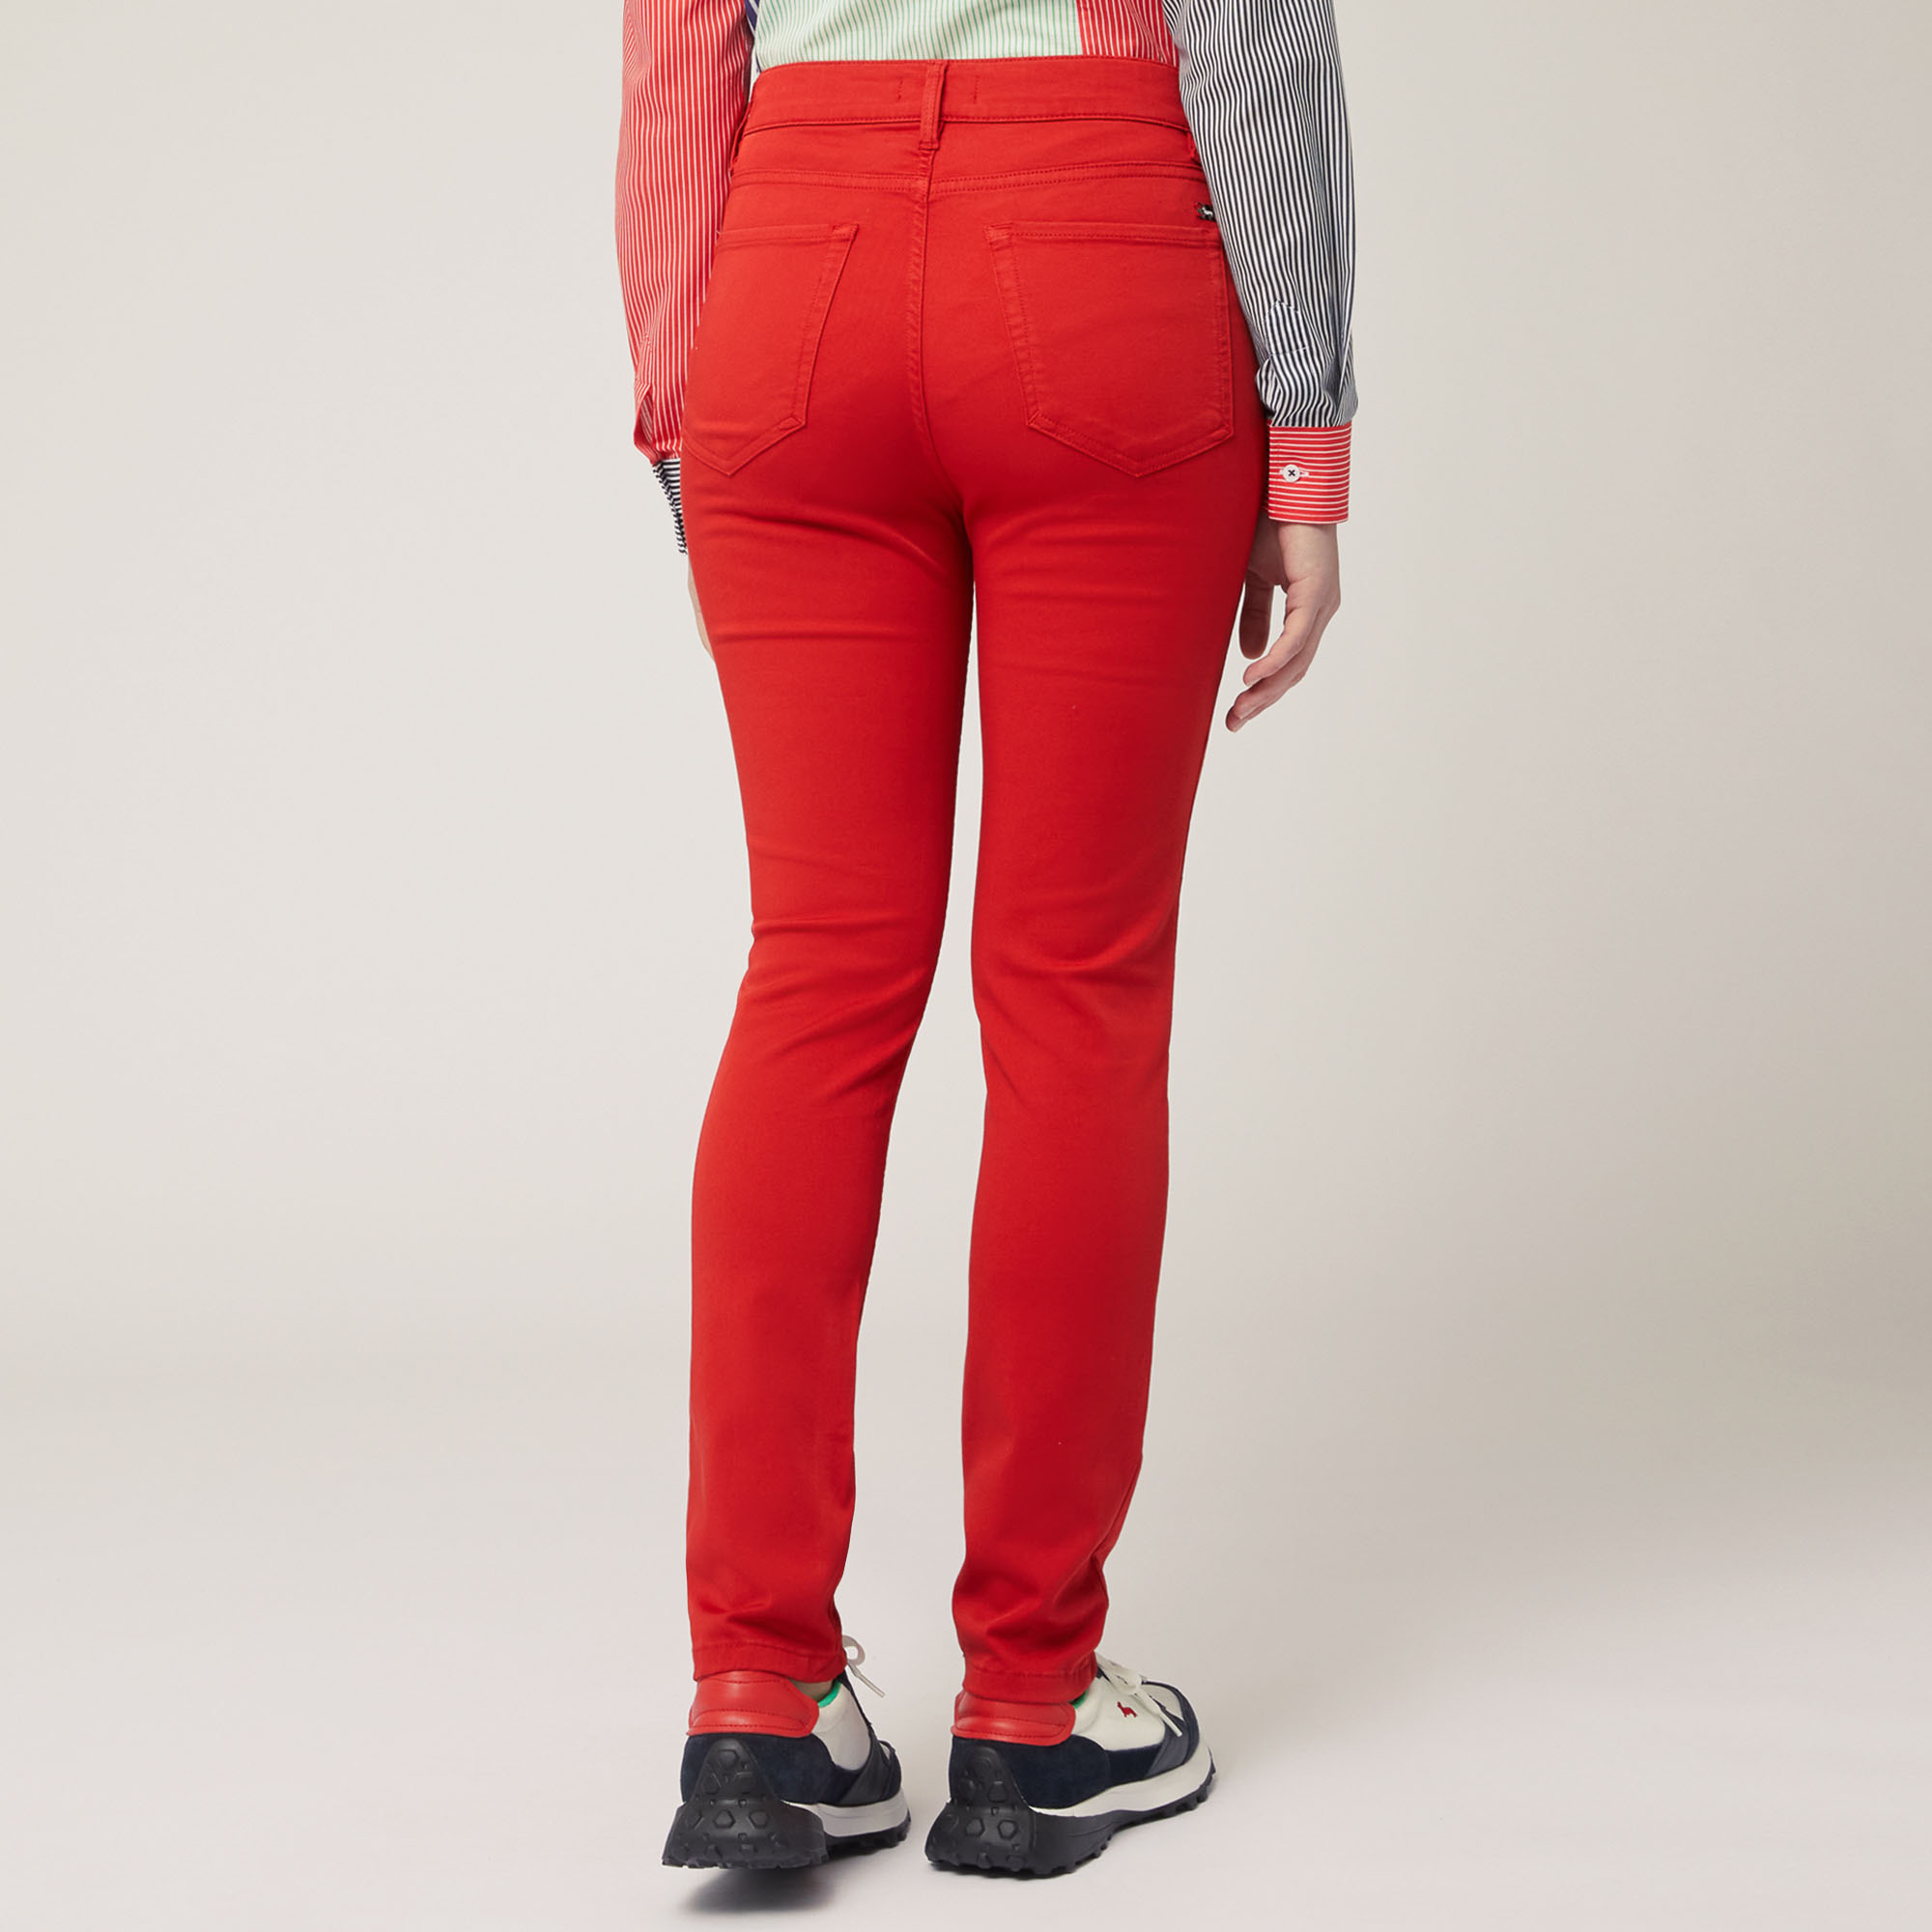 Pantaloni Slim Fit, Rosso Chiaro, large image number 1